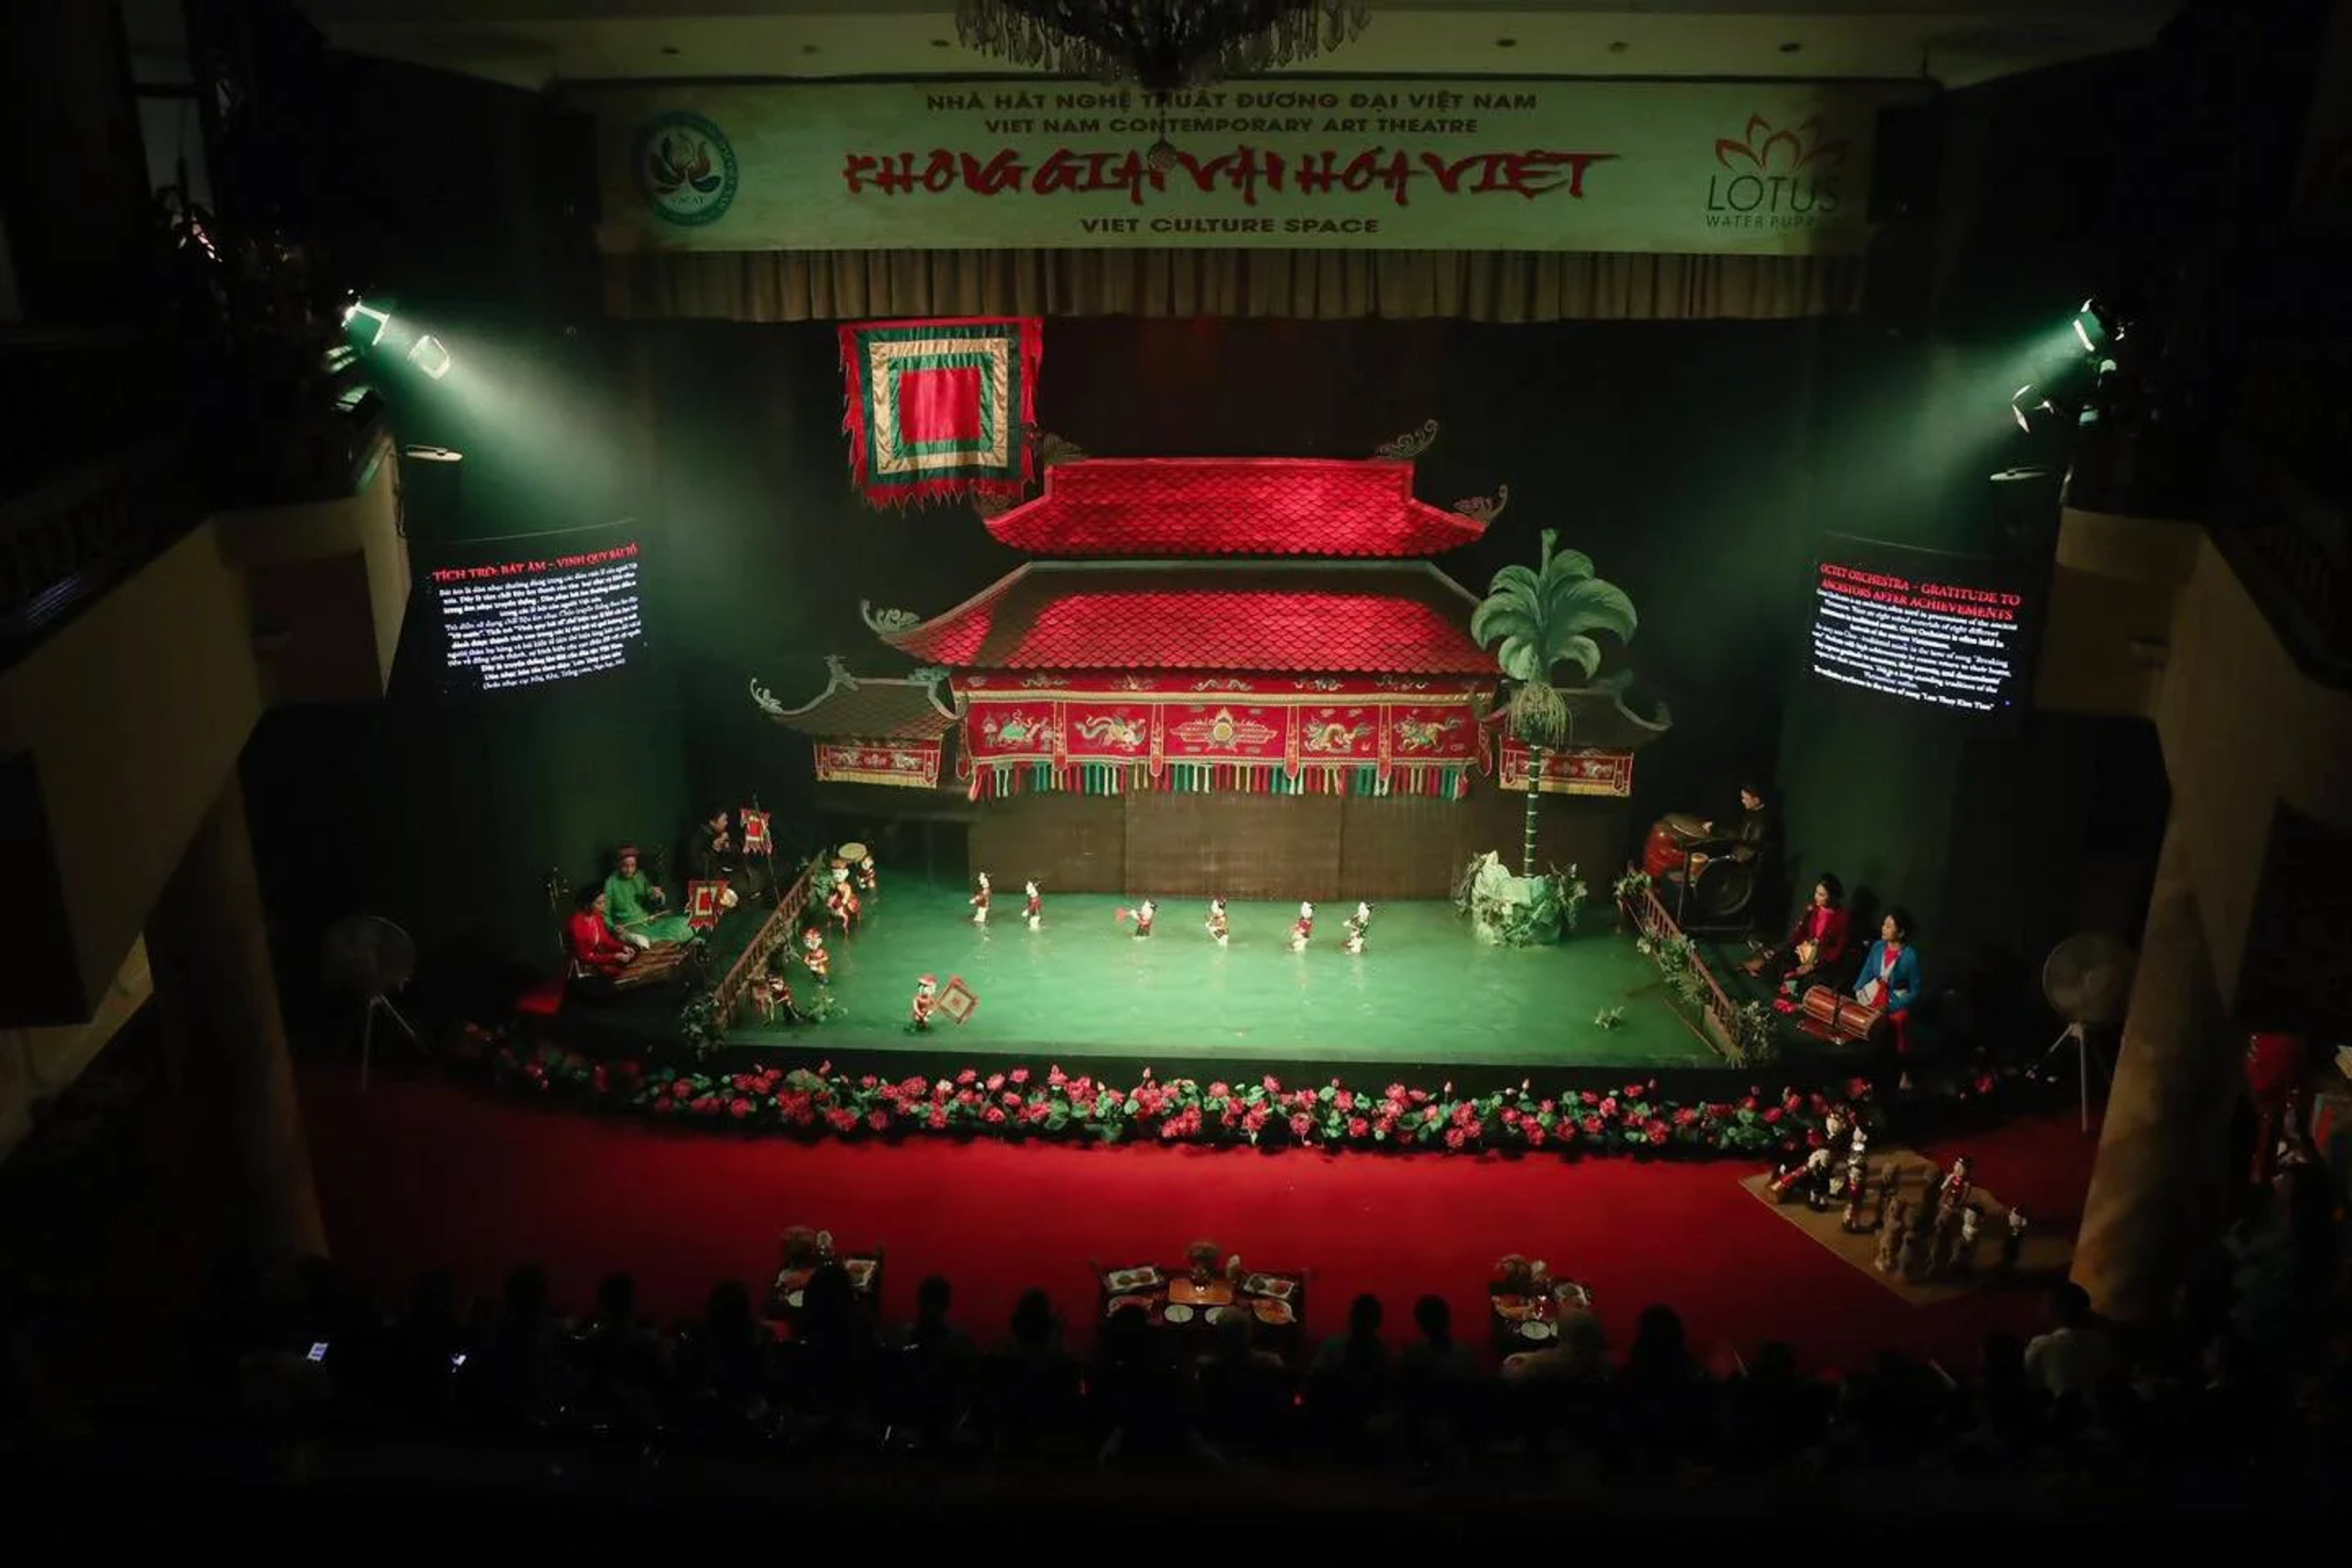 Thang Long Water Puppet Theatre - A Unique Cultural Destination for Visitors